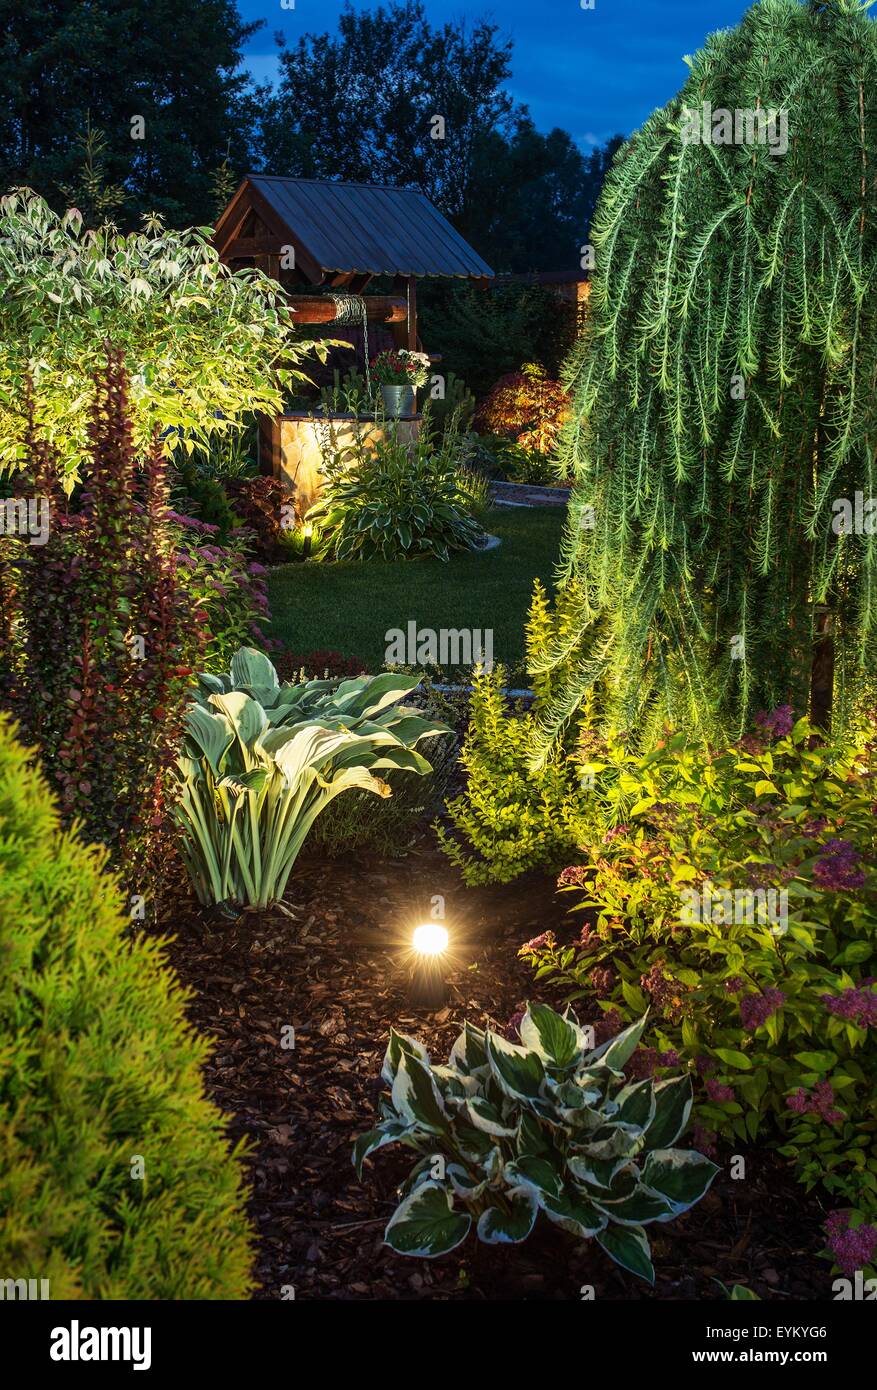 Garten-Beleuchtung. Beleuchteten Garten mit verschiedenen Pflanzen nachts.  Vertikale Closeup Foto Stockfotografie - Alamy